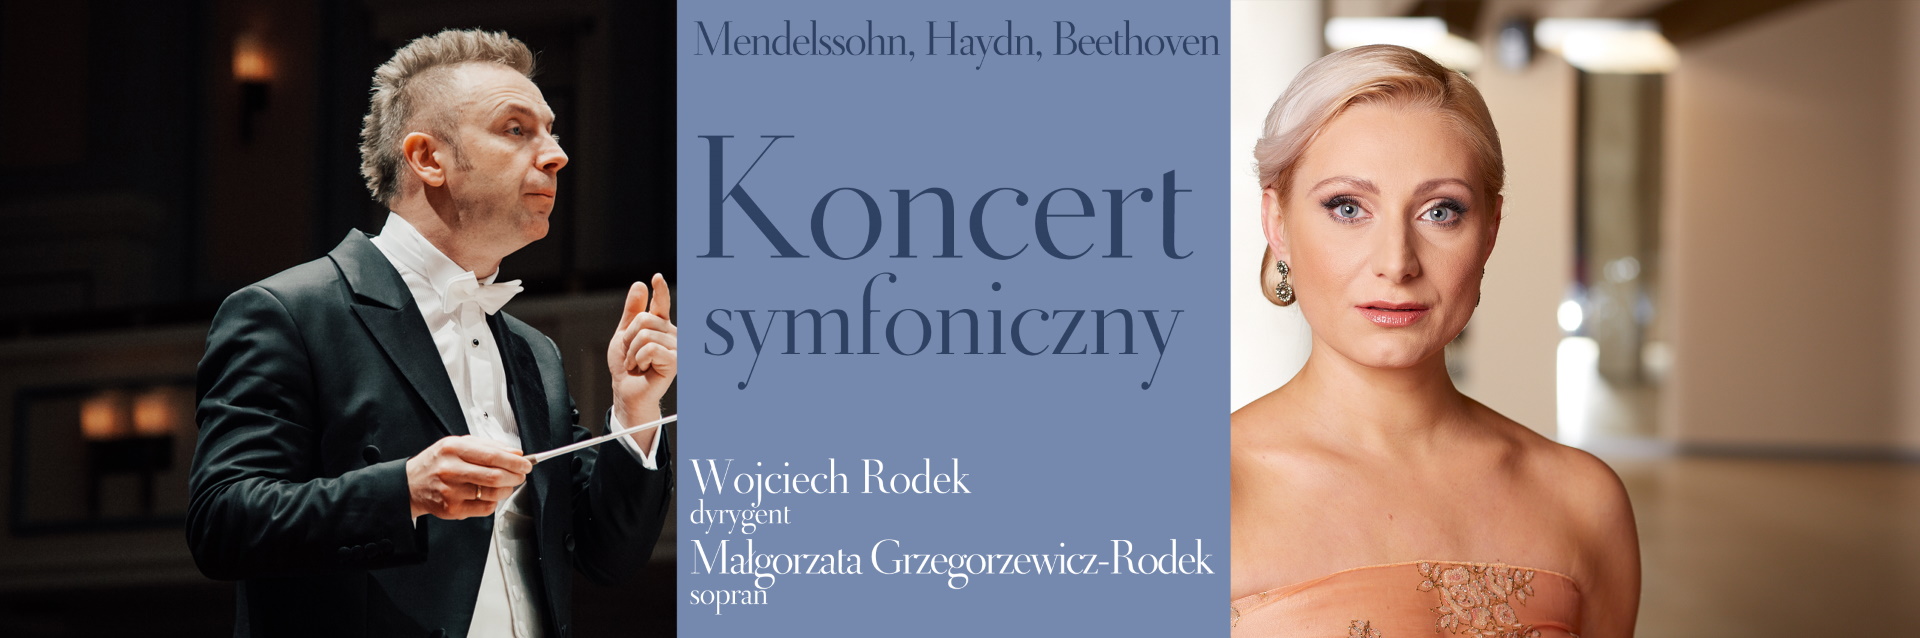 Plakat zapraszający w piątek 24 marca 2023 r. do Olsztyna na koncert symfoniczny – Mendelssohn, Haydn, Beethoven Filharmonia Olsztyn 2023.